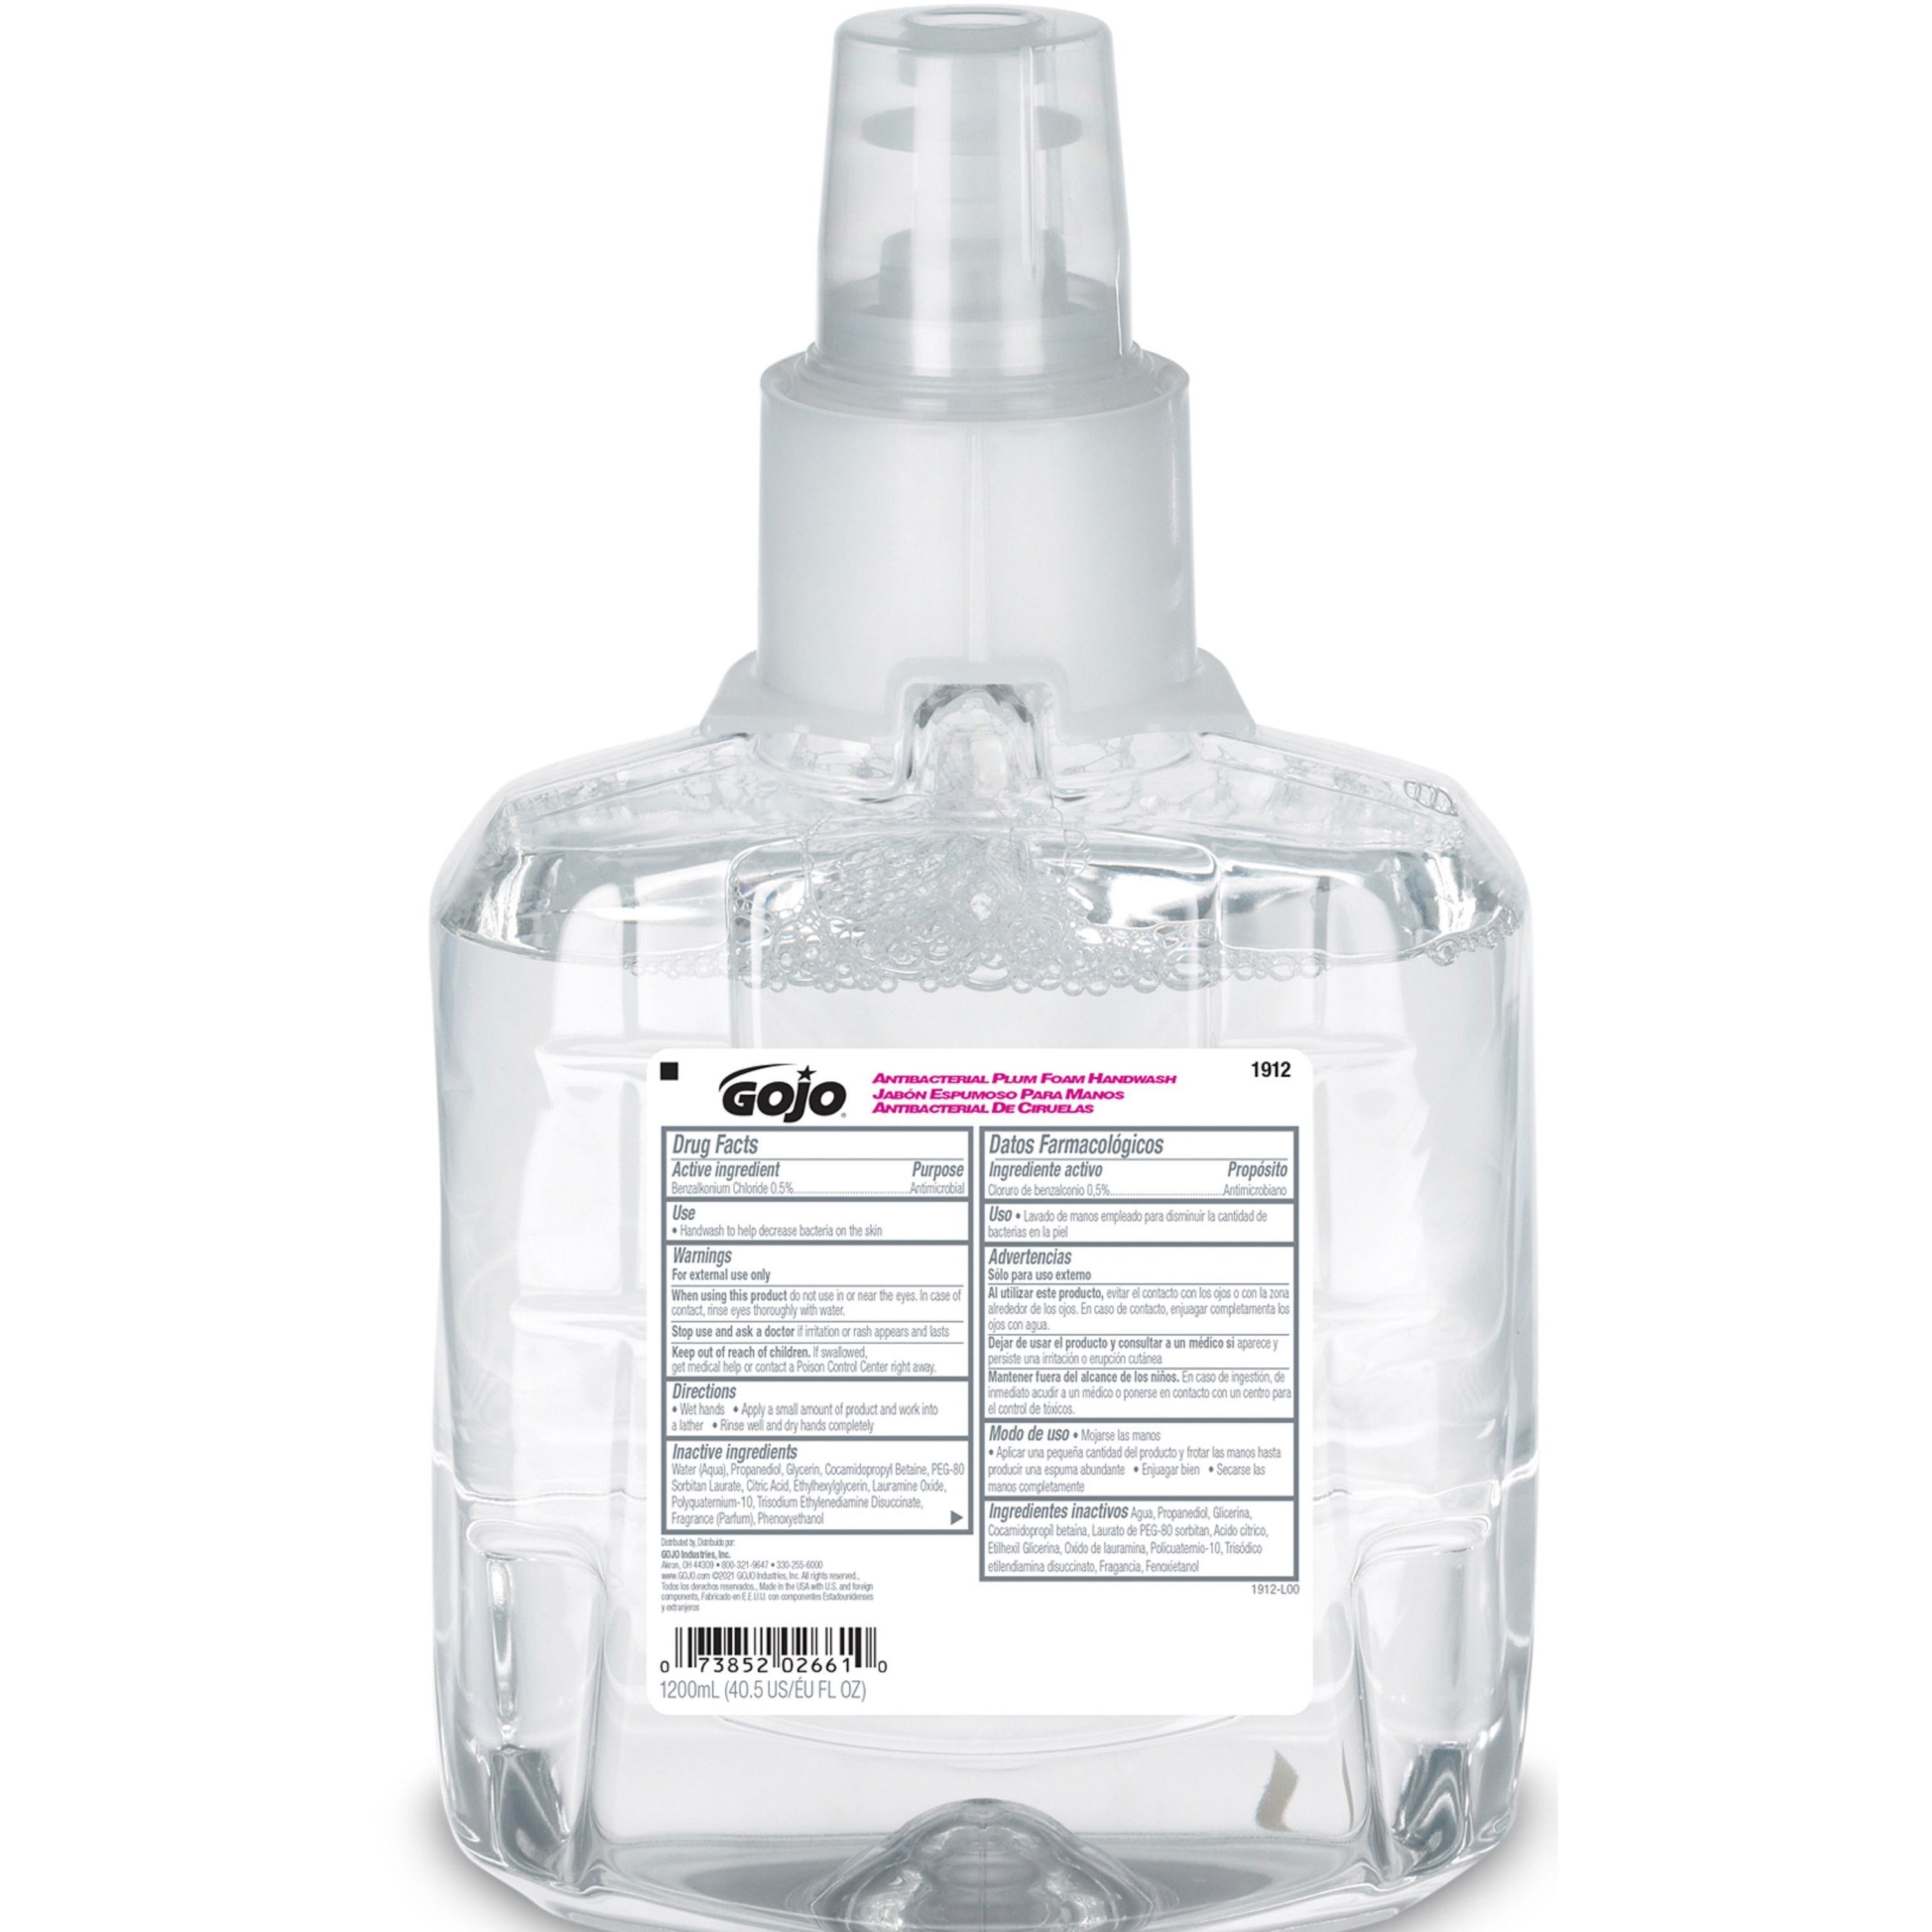 gojo-ltx-12-dispenser-plum-antibacterial-hand-soap-plum-scentfor-406-fl-oz-1200-ml-pump-bottle-dispenser-kill-germs-hand-skin-moisturizing-antibacterial-bio-based-durable-2-carton_goj191202 - 2